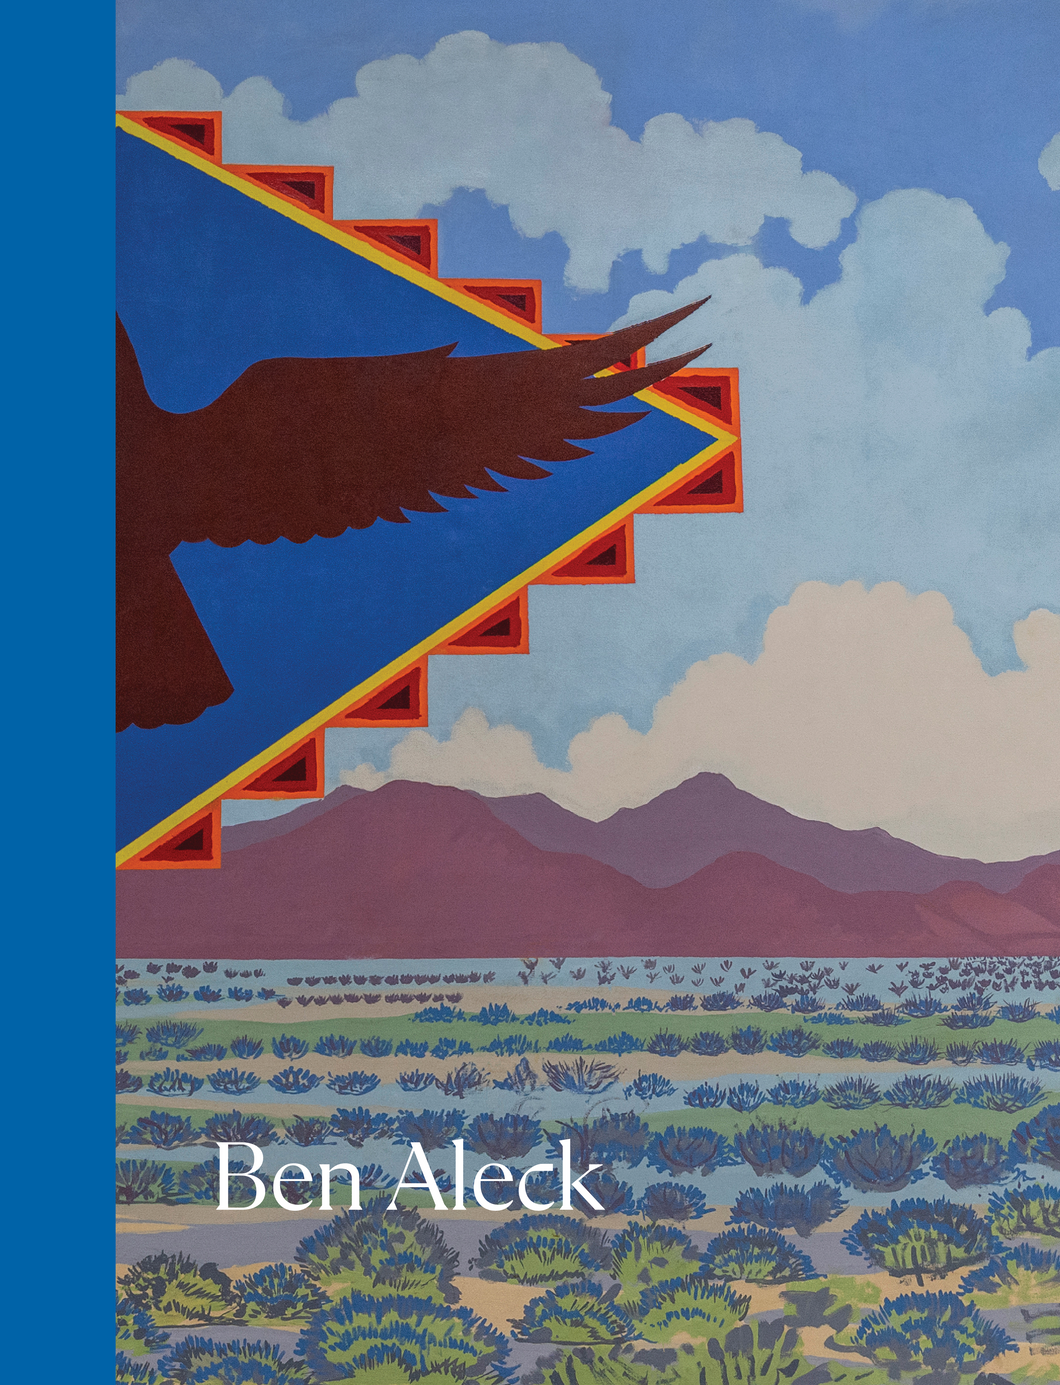 The Art of Ben Aleck